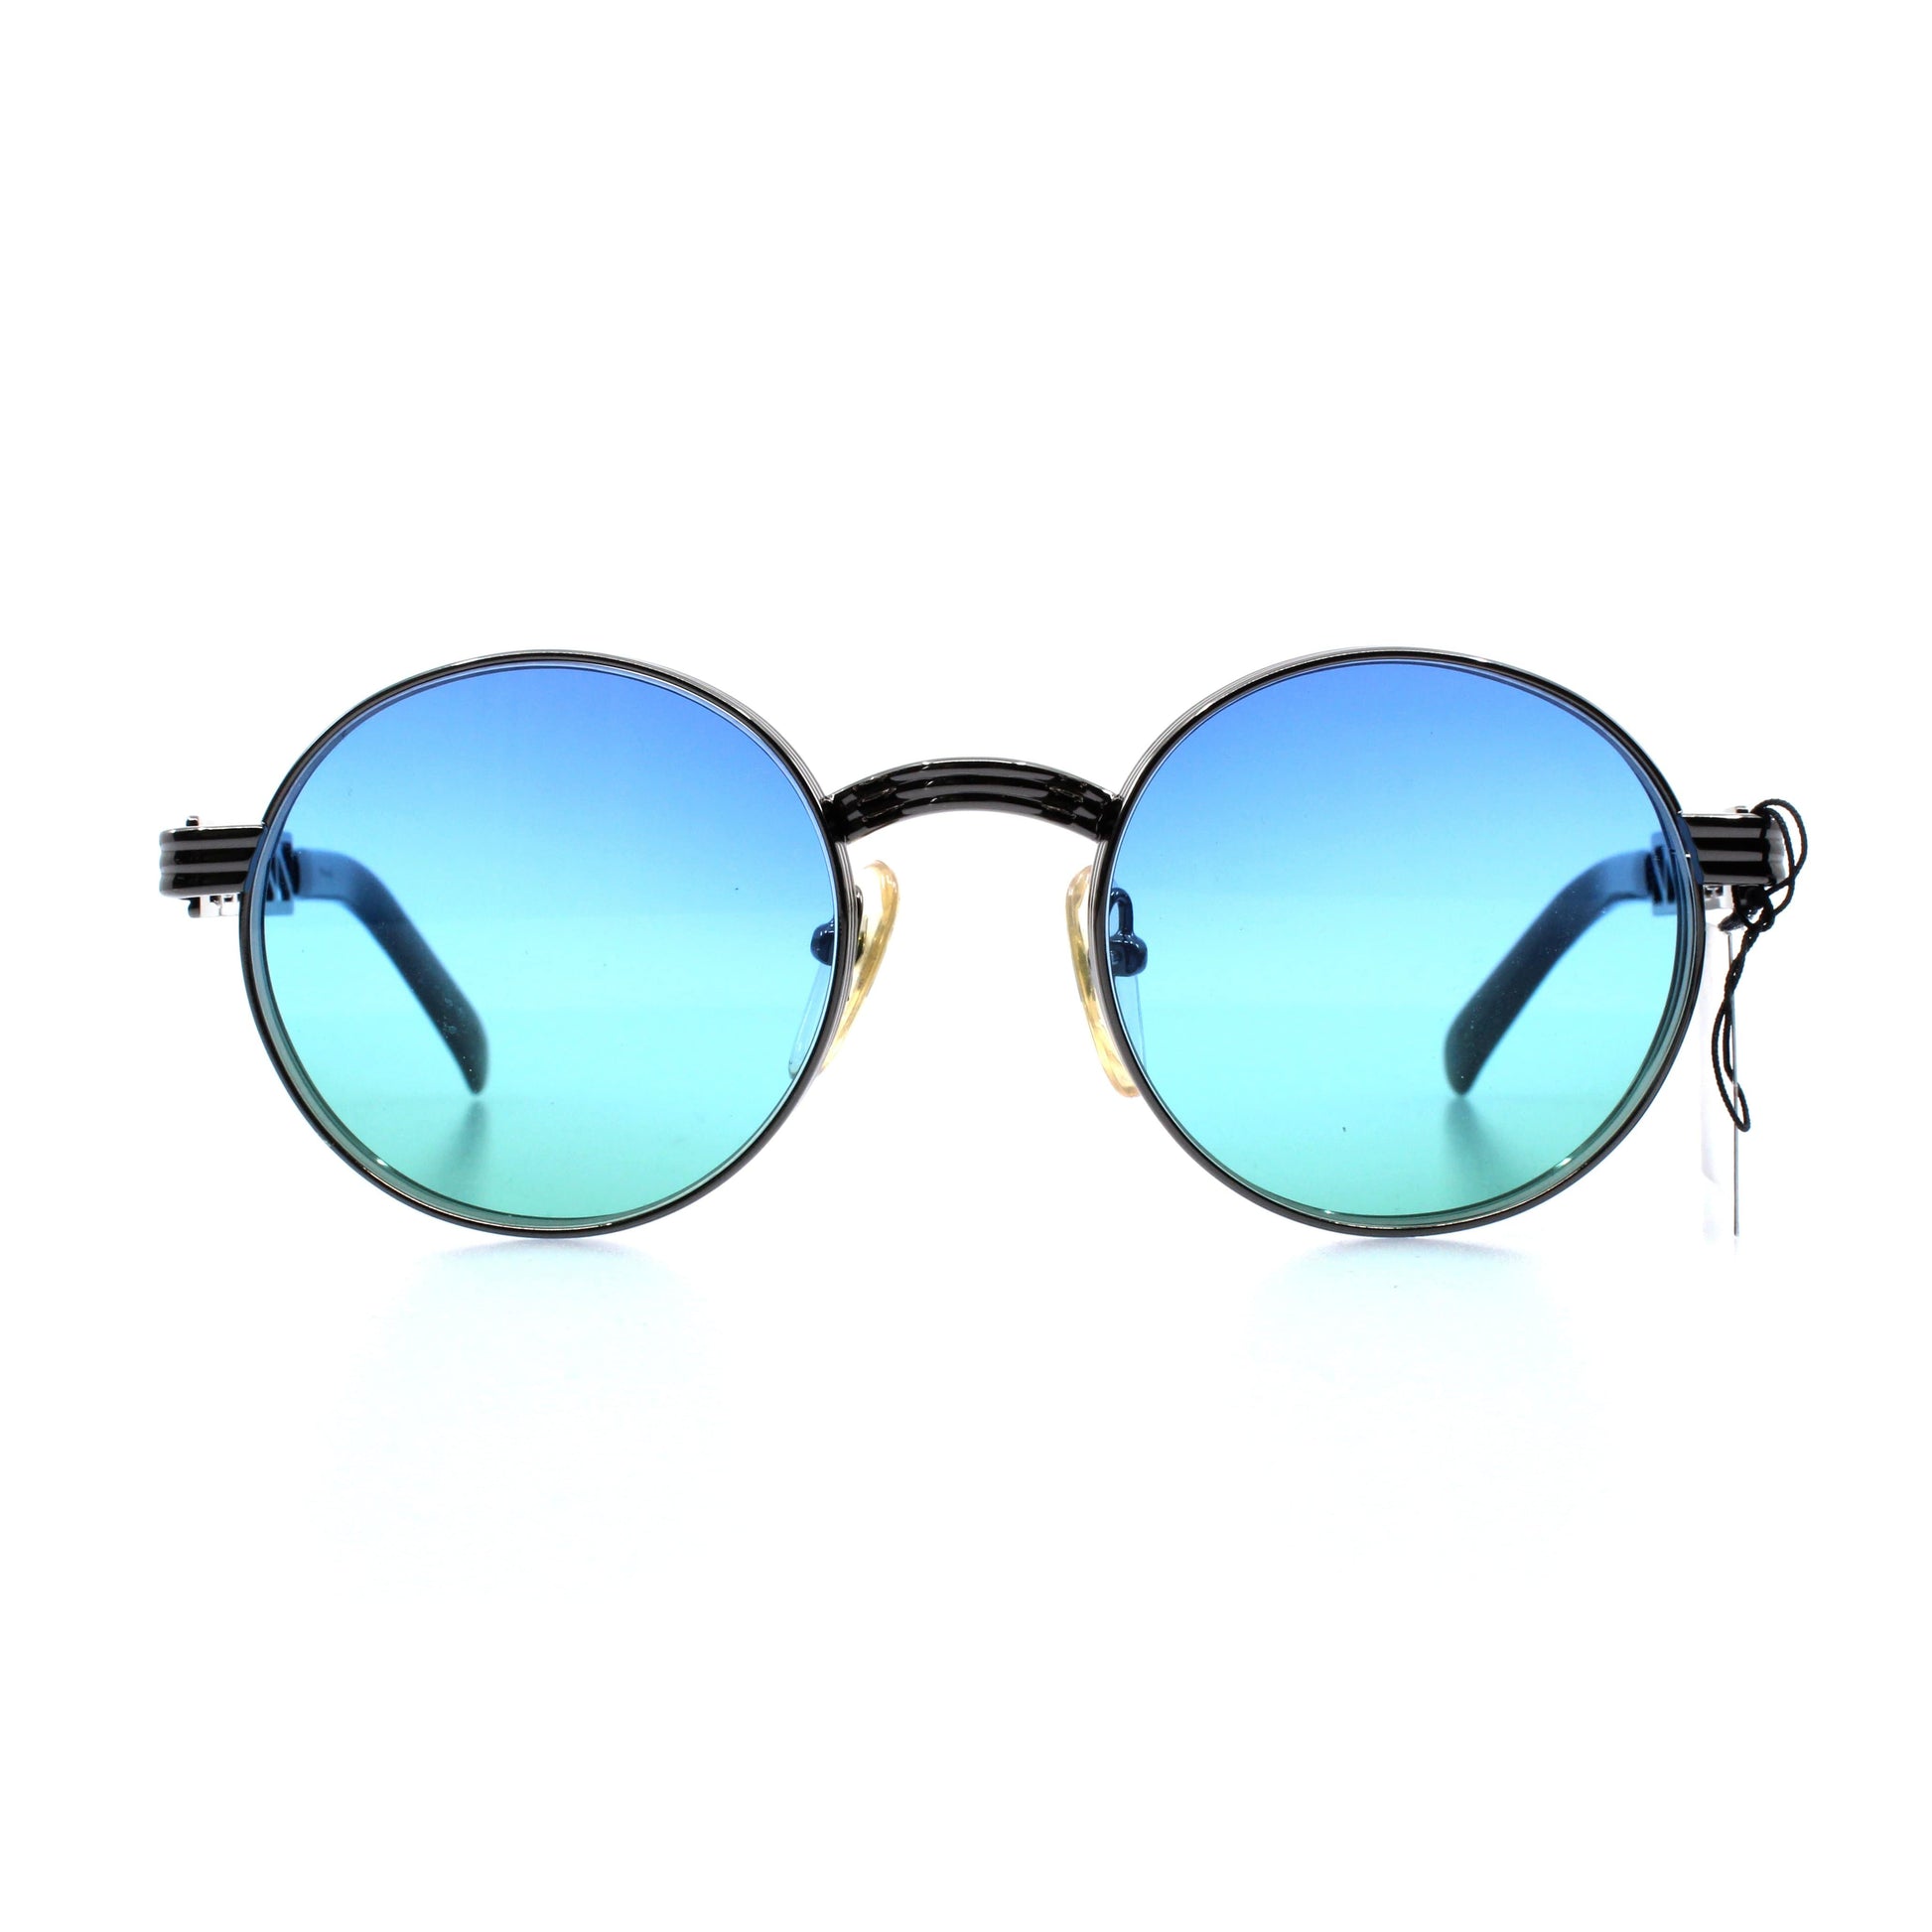 Black Vintage Jean Paul Gaultier 56-0173 Sunglasses RSTKD Vintage